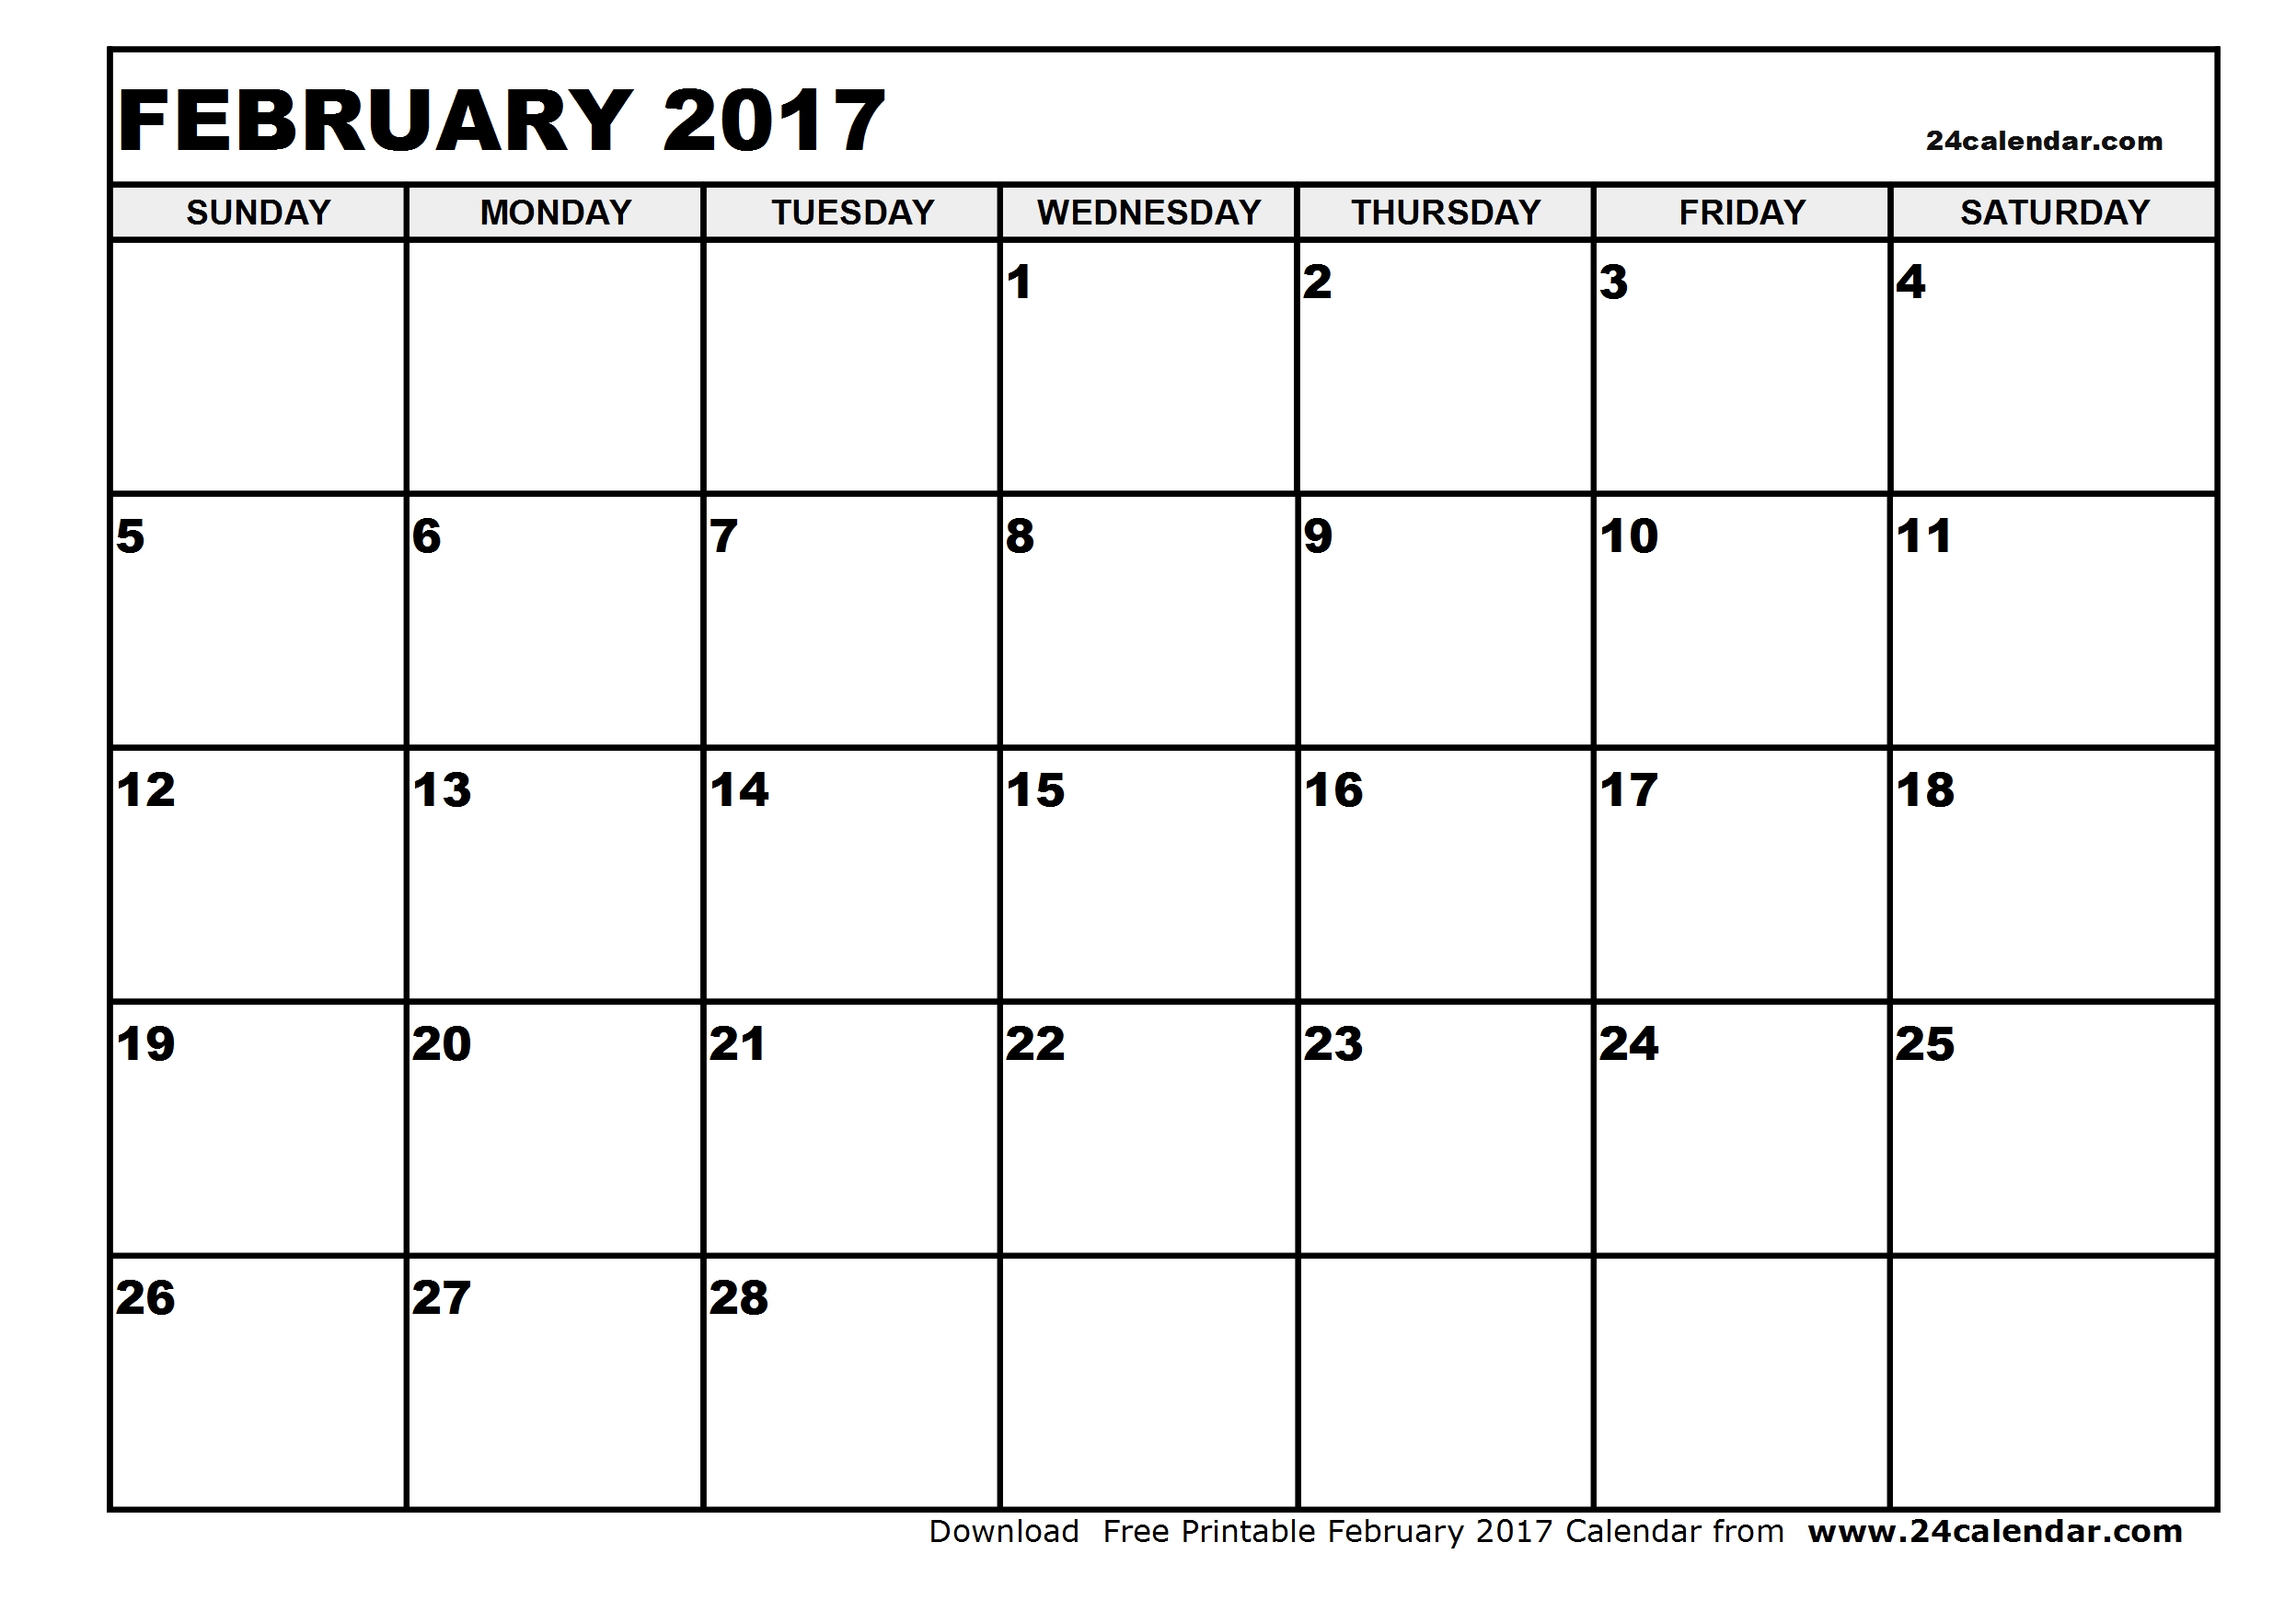 February 2017 Calendar Excel Template